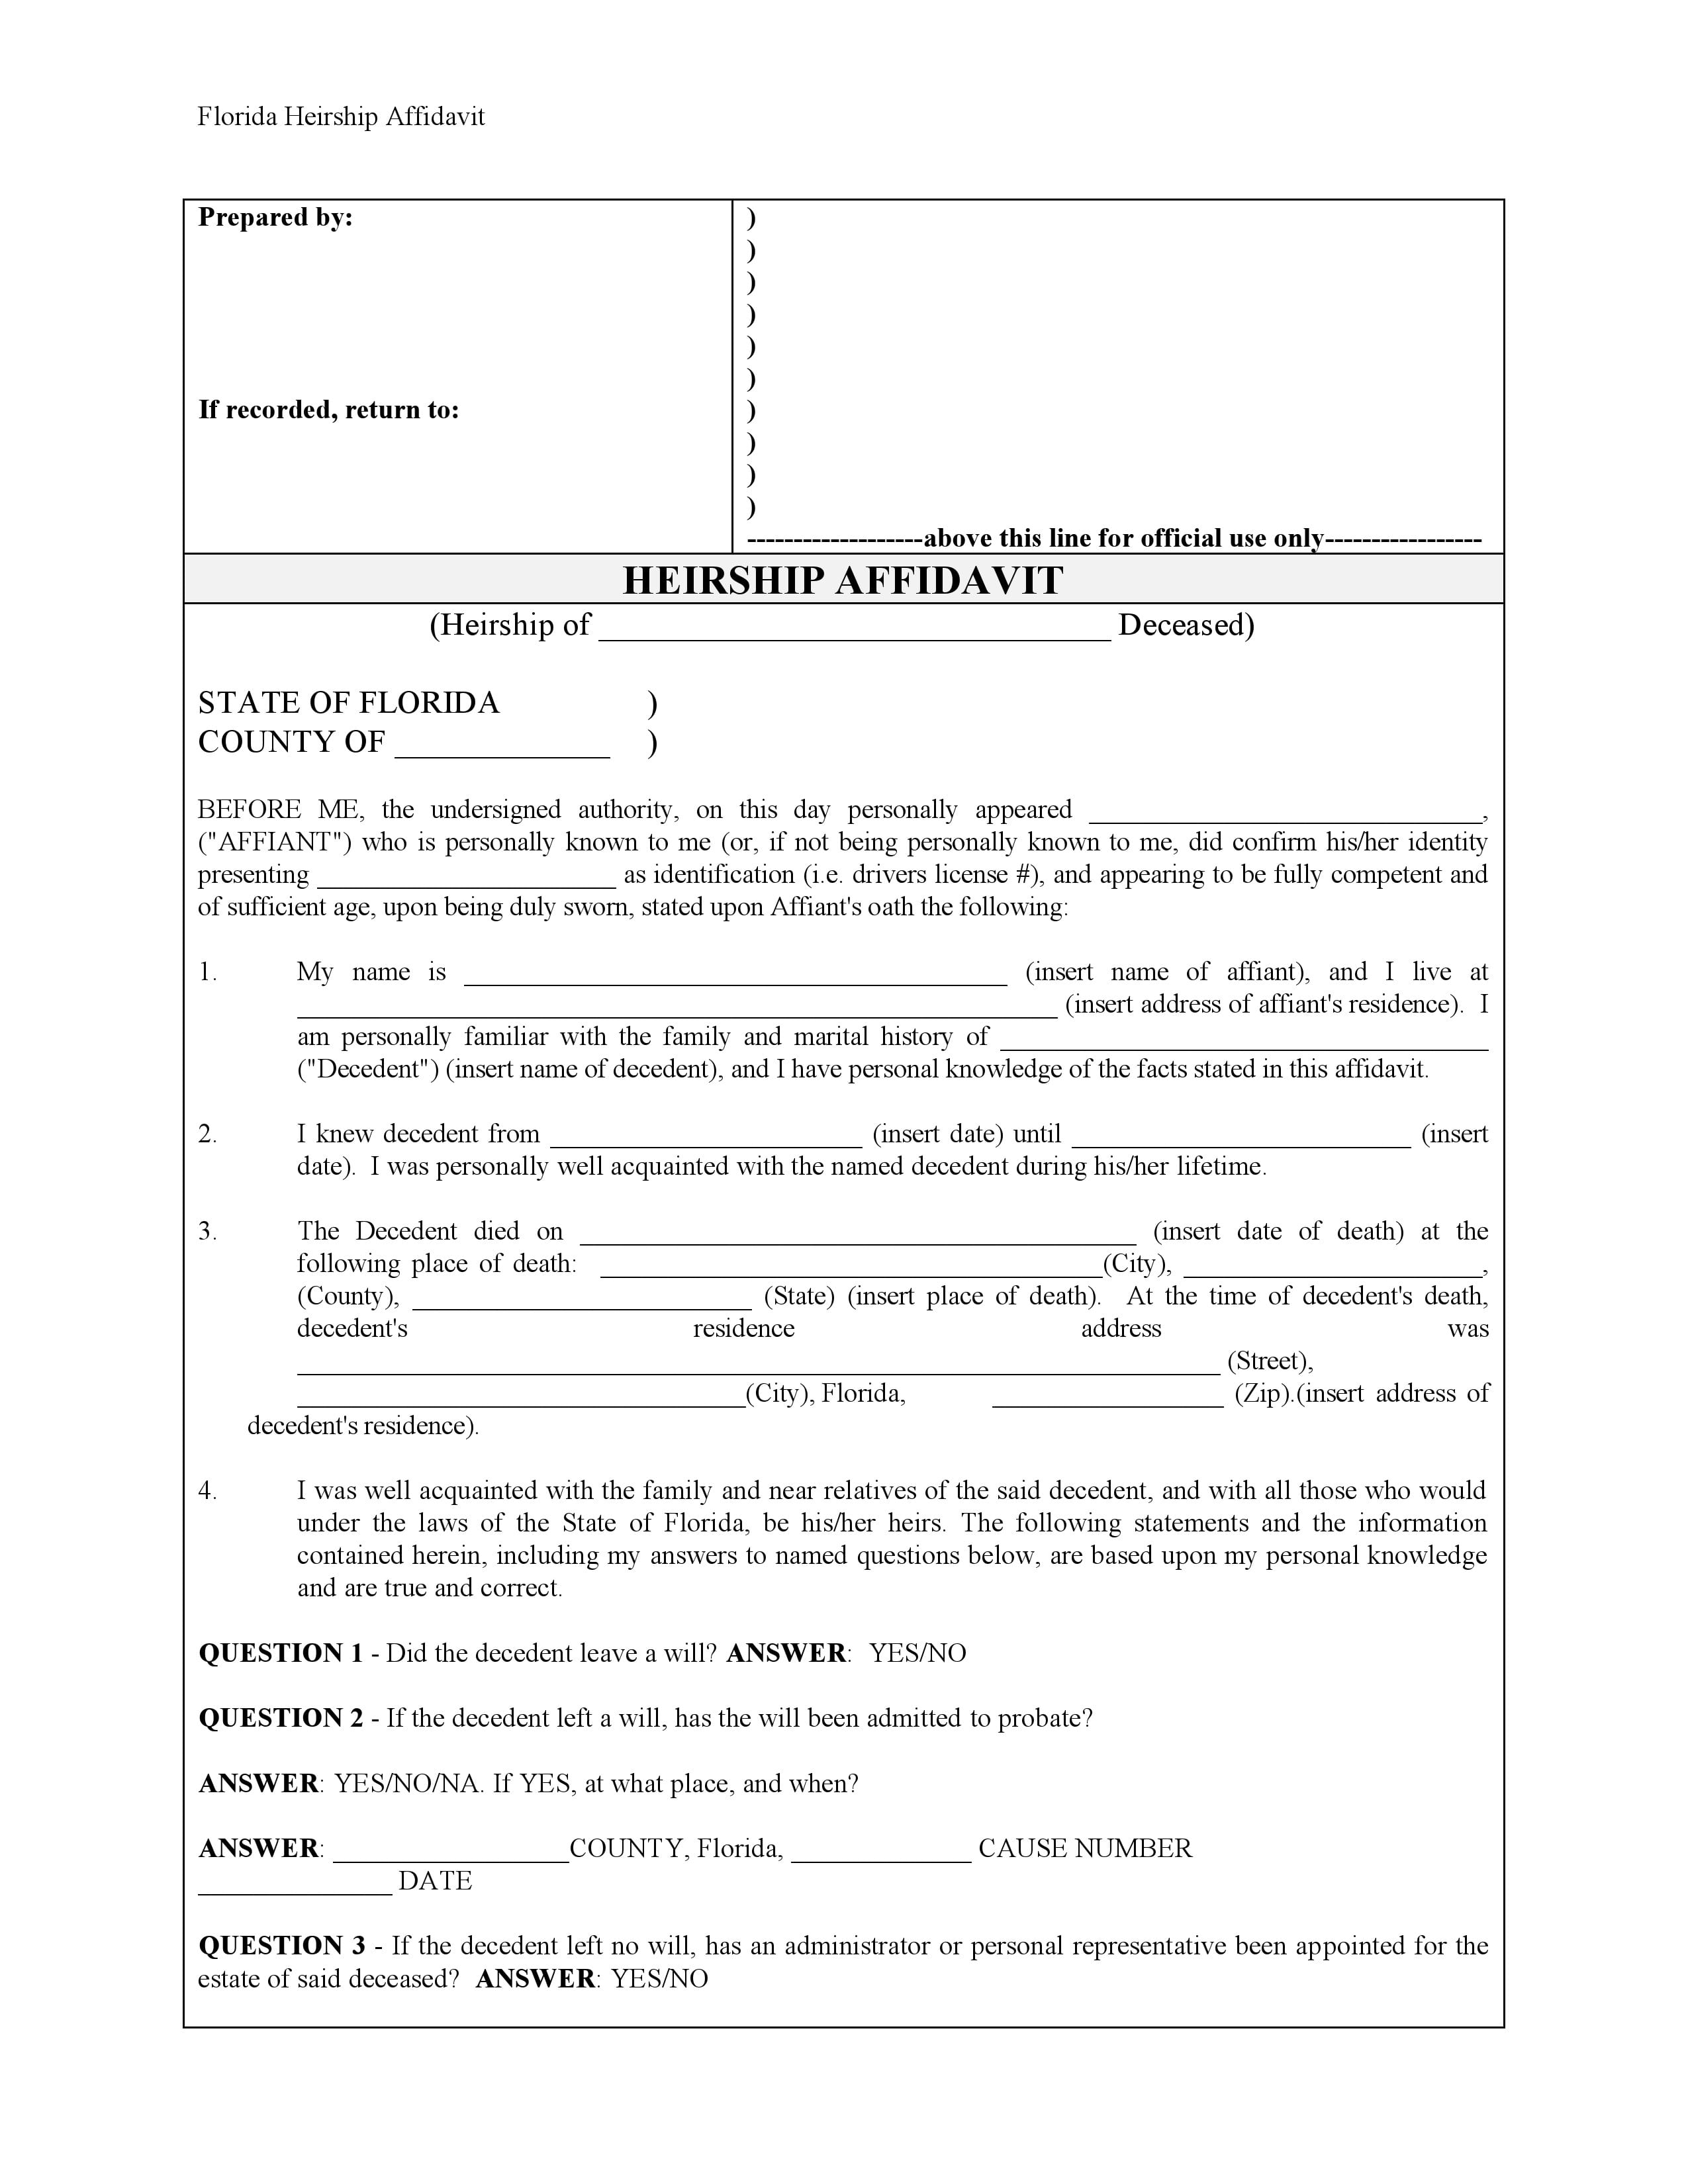 Florida Affidavit Of Heirship